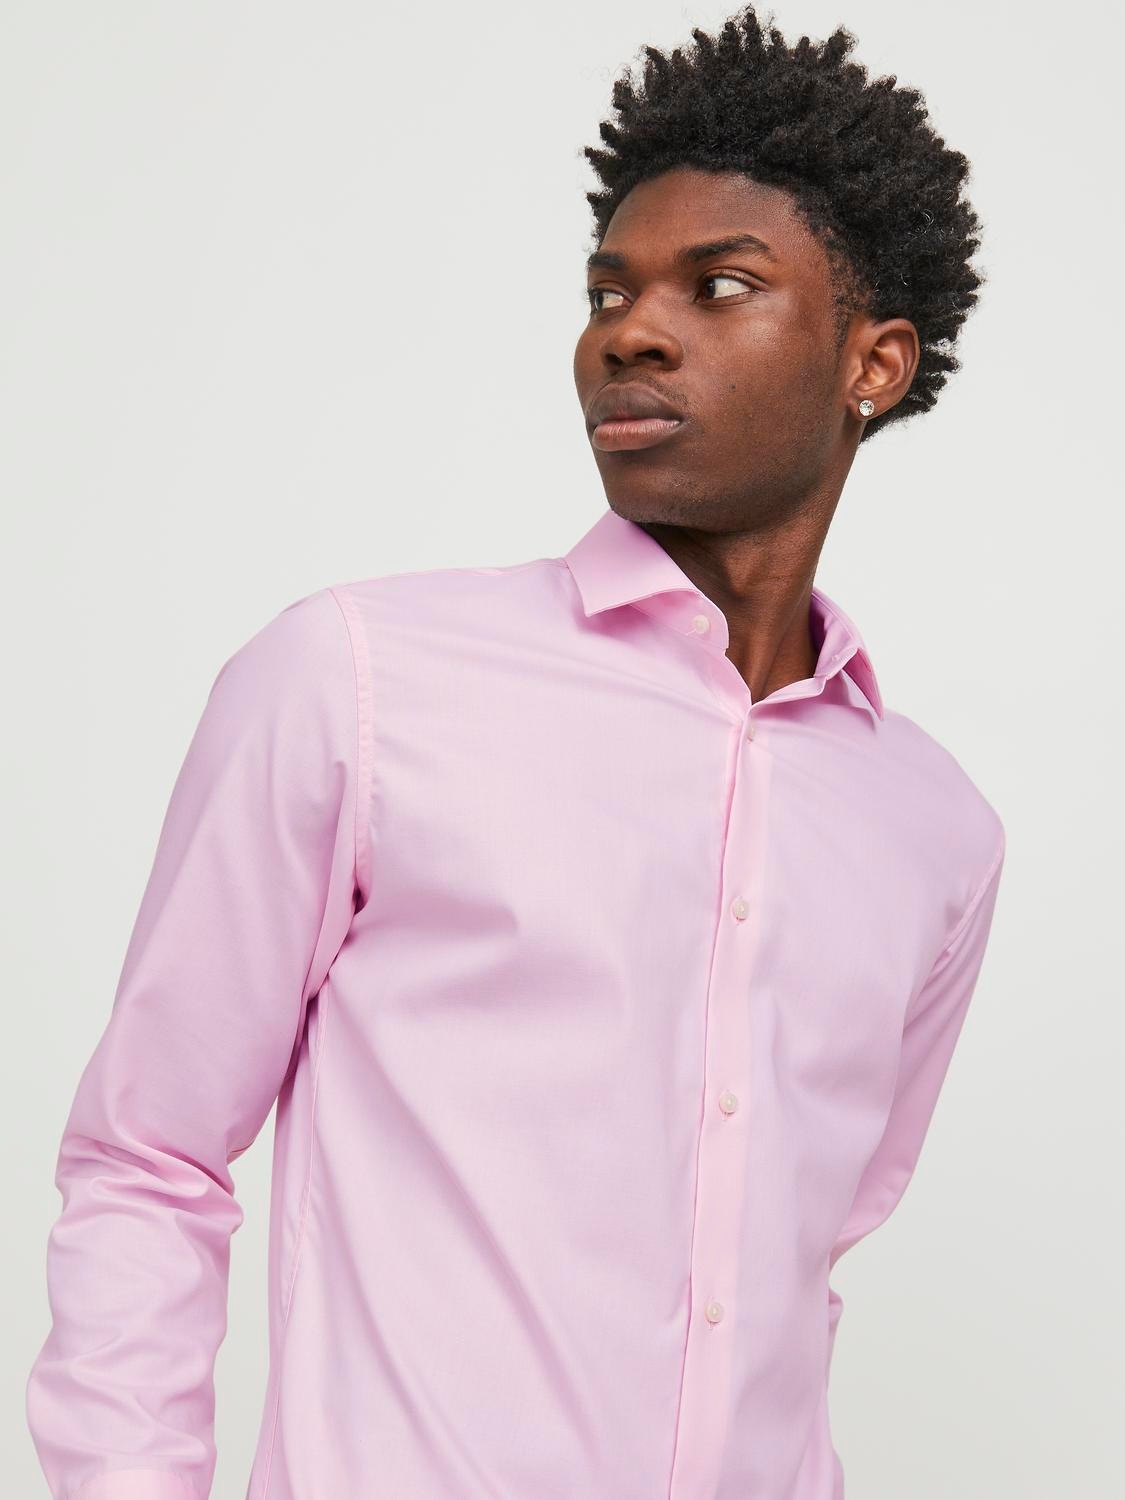 Jack & Jones Slim Fit Shirt -Pink Nectar - 12227385